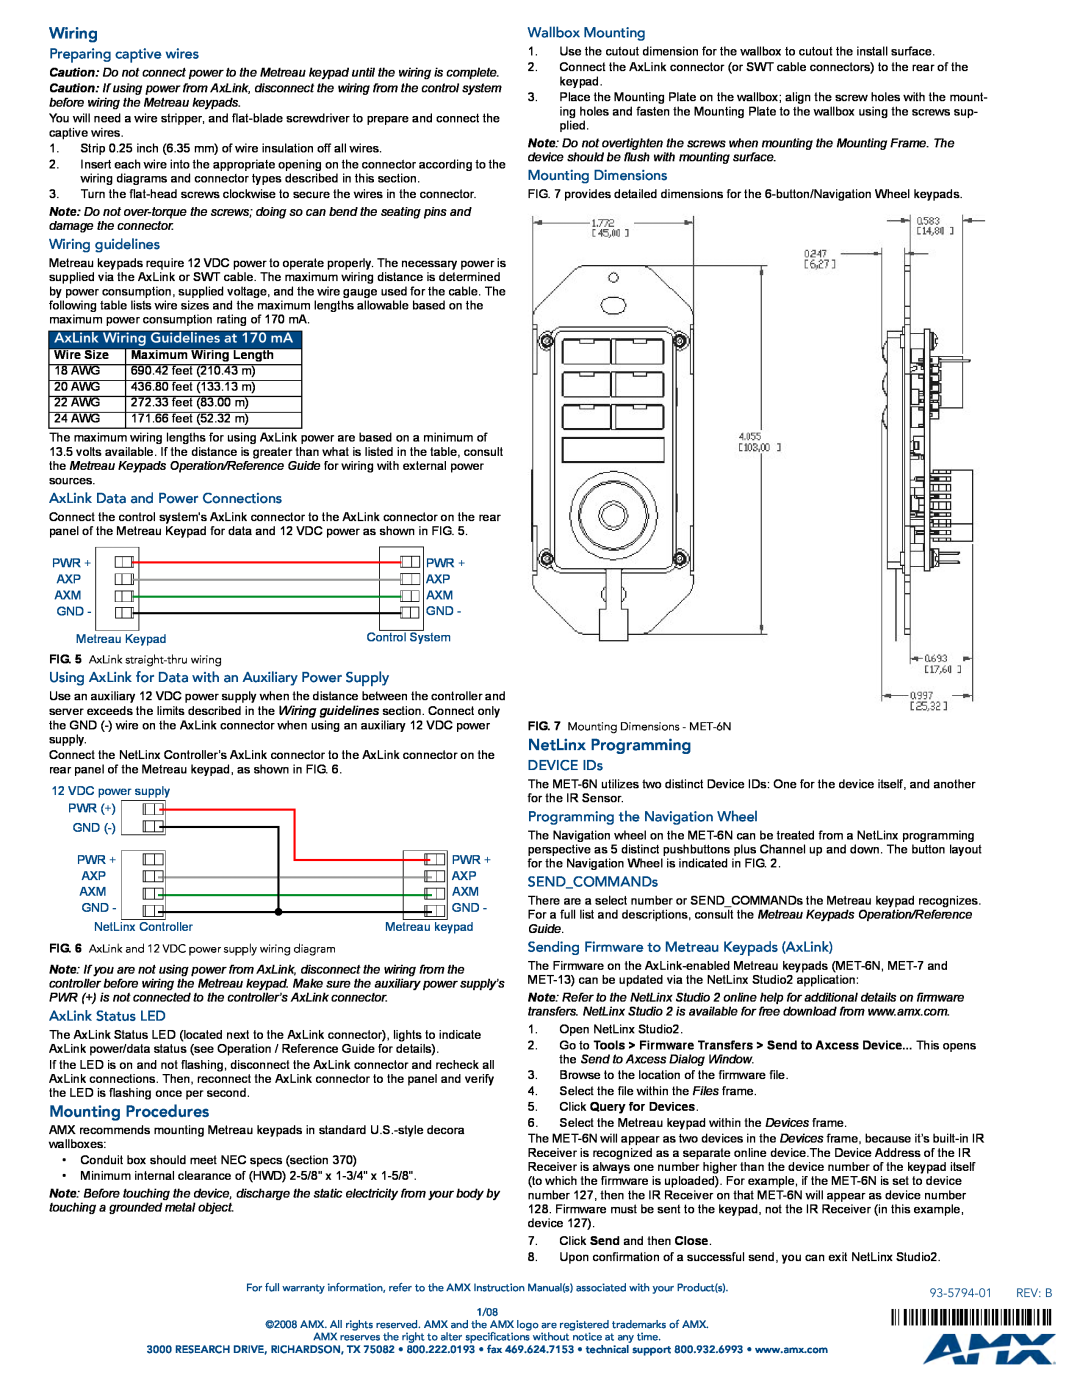 AMX MET-6N specifications Mounting Procedures, NetLinx Programming, AxLink Wiring Guidelines at 170 mA 